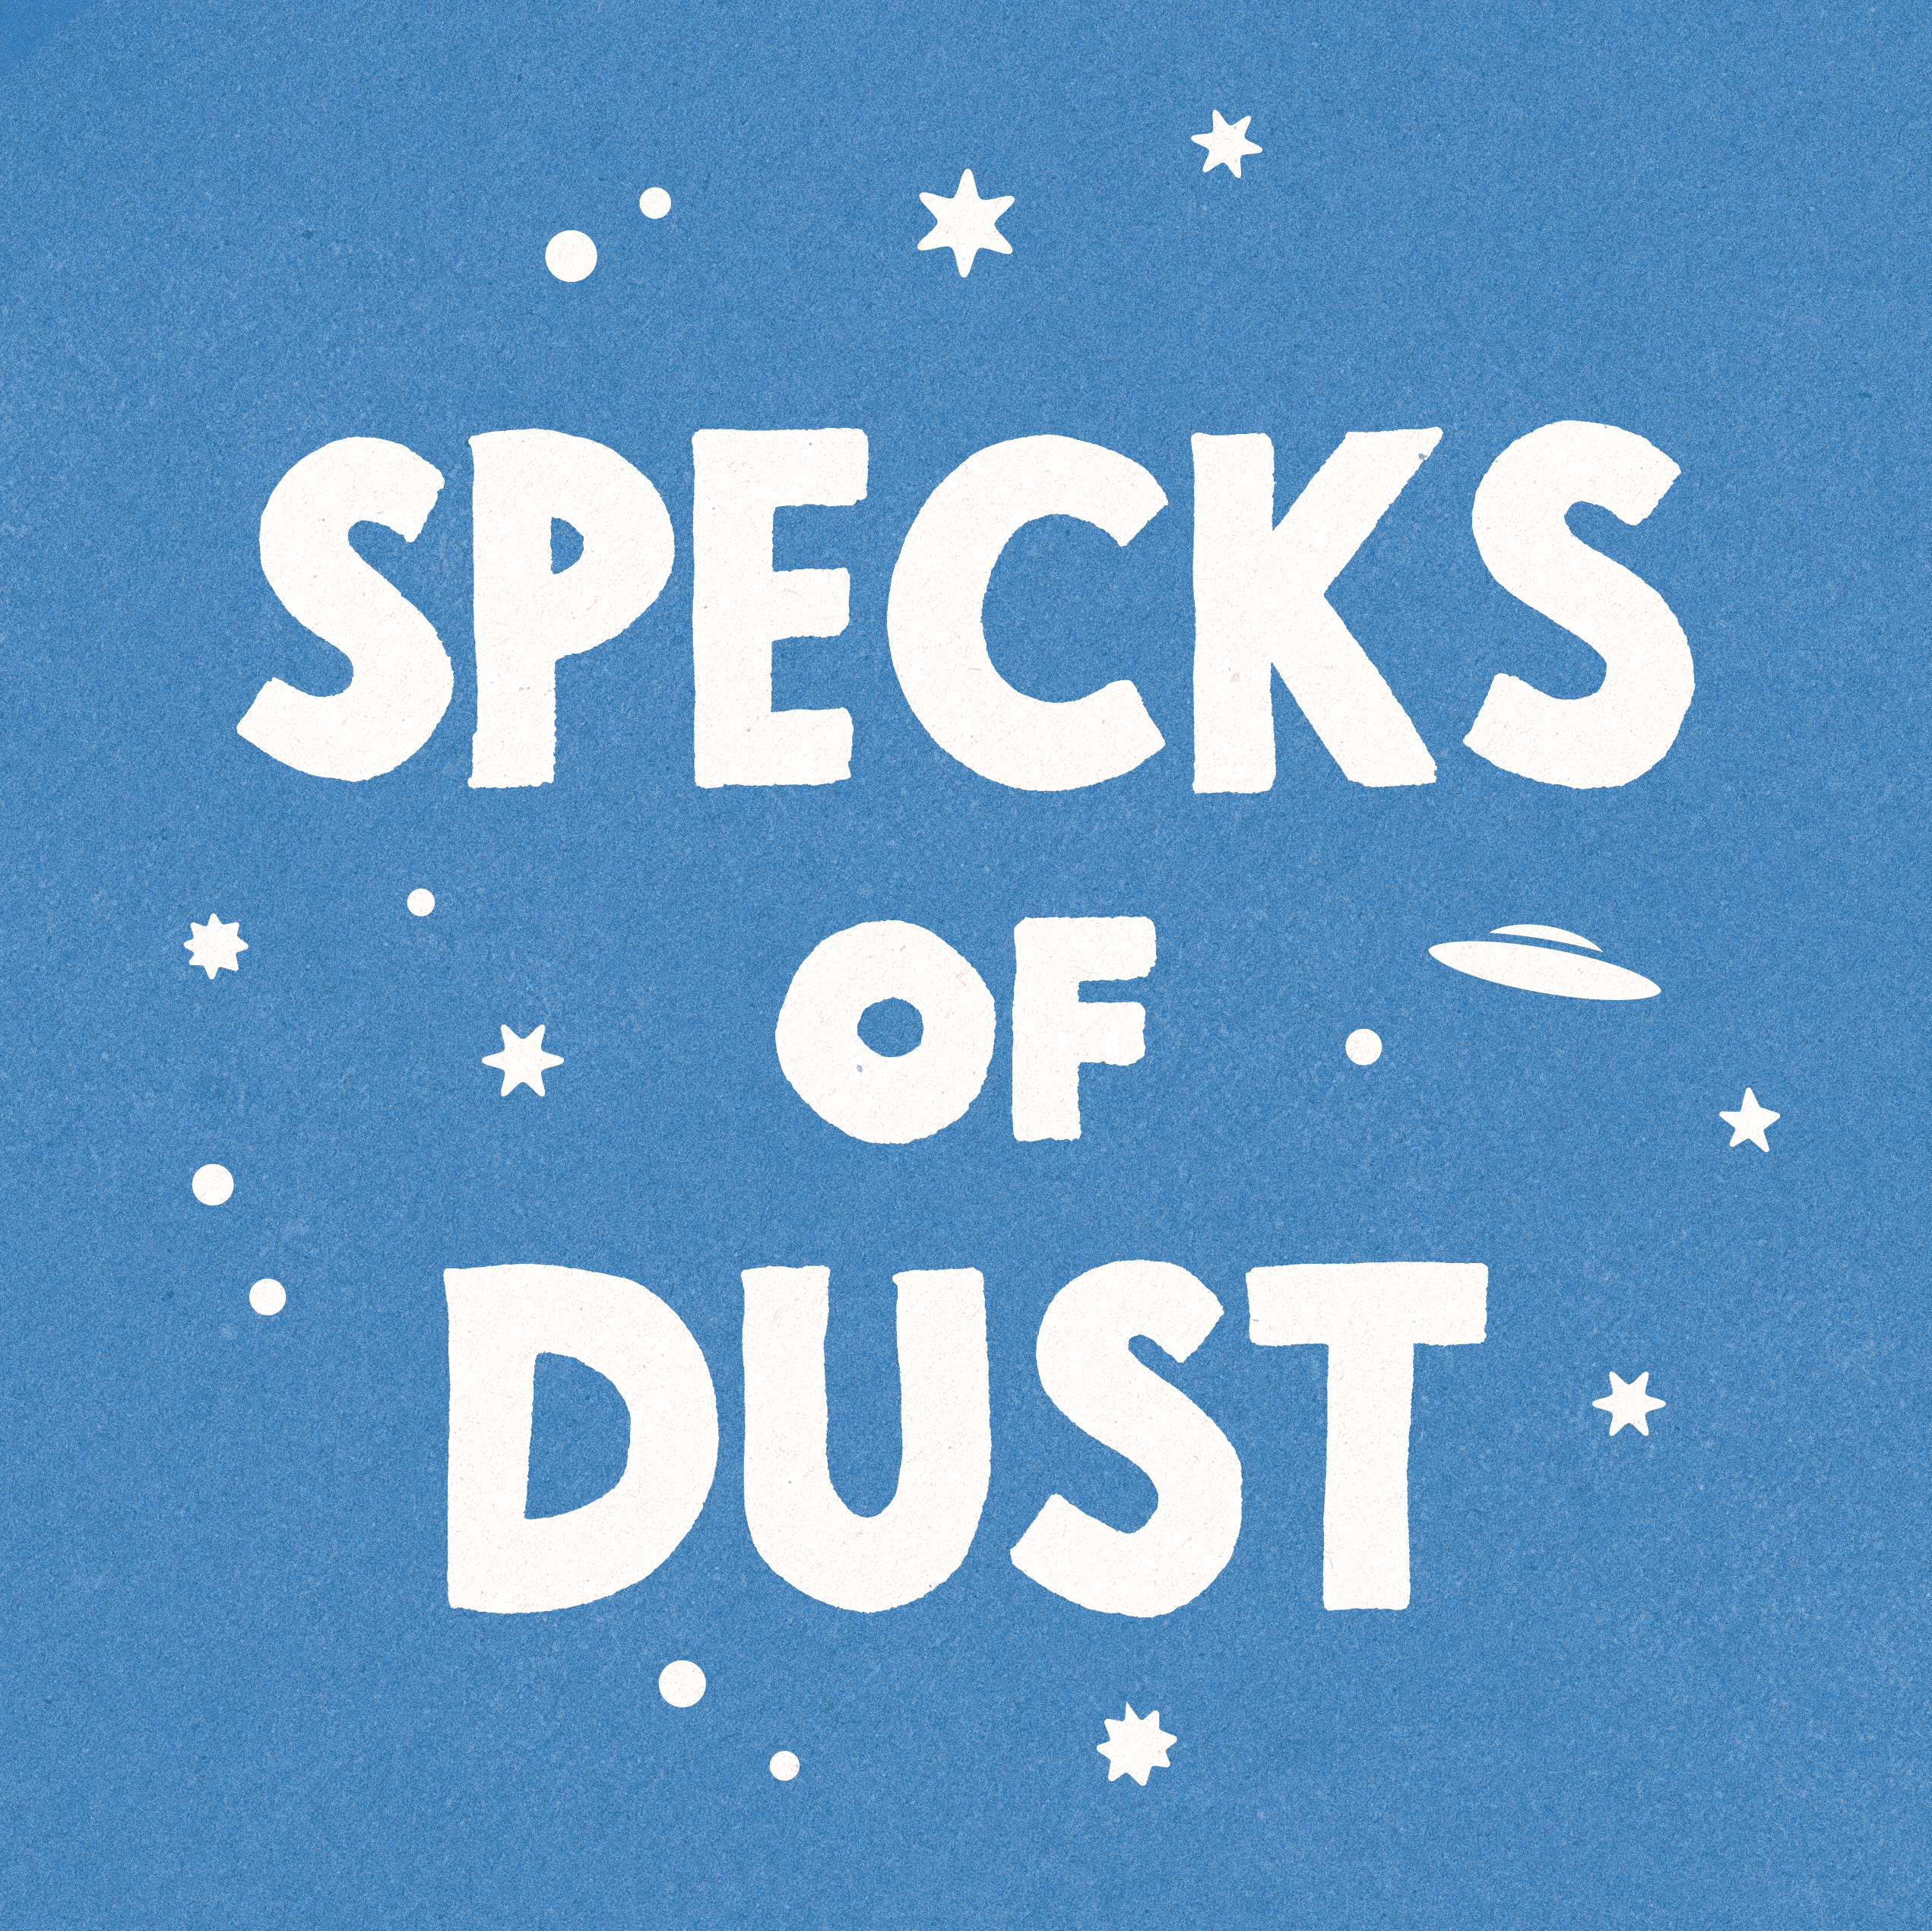 Specks-of-Dust-Deployer